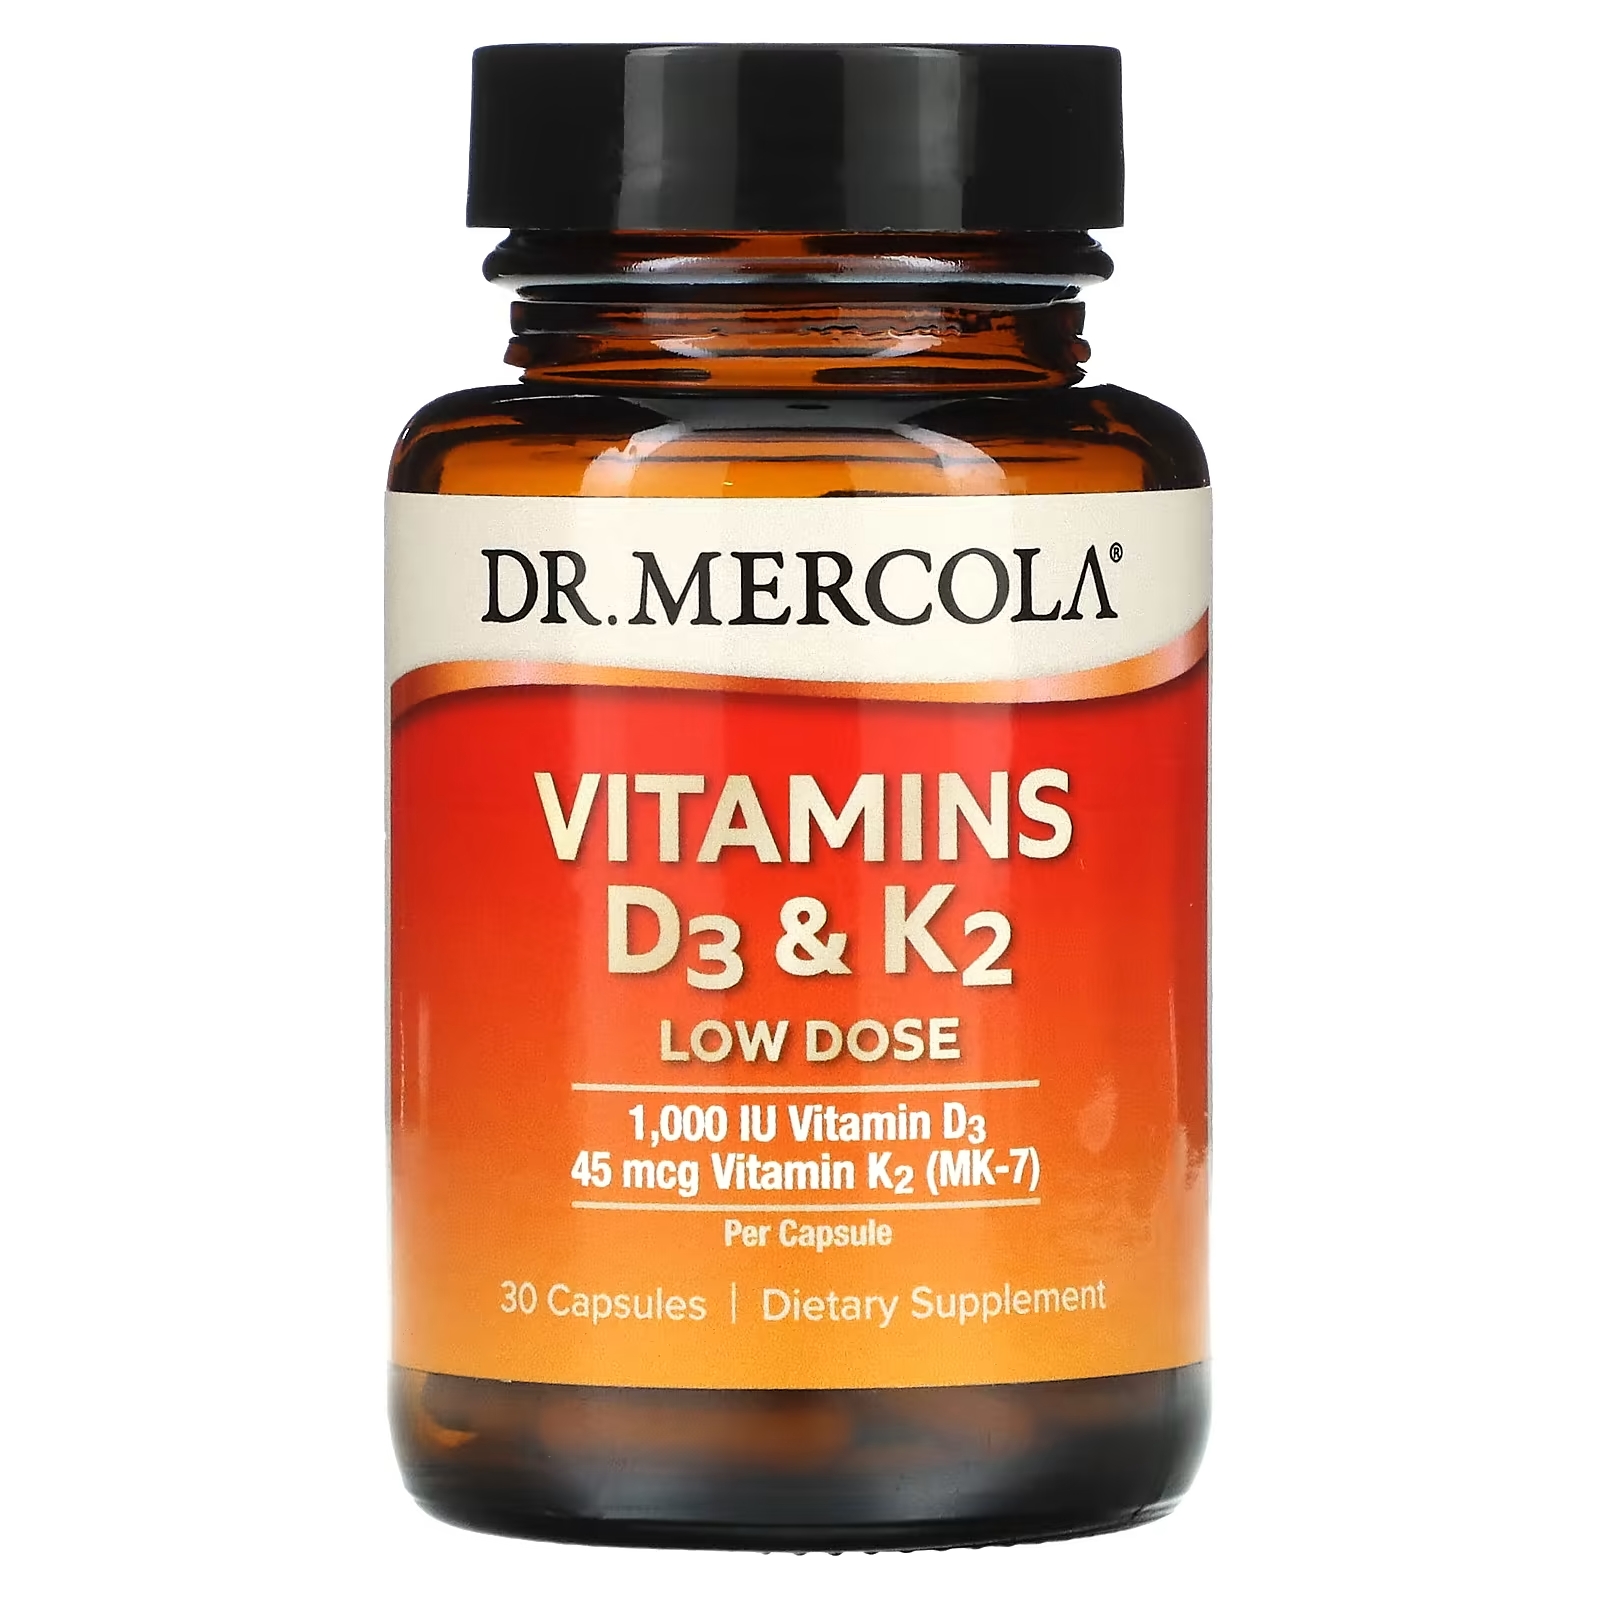 Dr. Mercola Vitamins D3 & K2 Low Dose, 30 капсул витамины d3 и k2 dr mercola 30 капсул